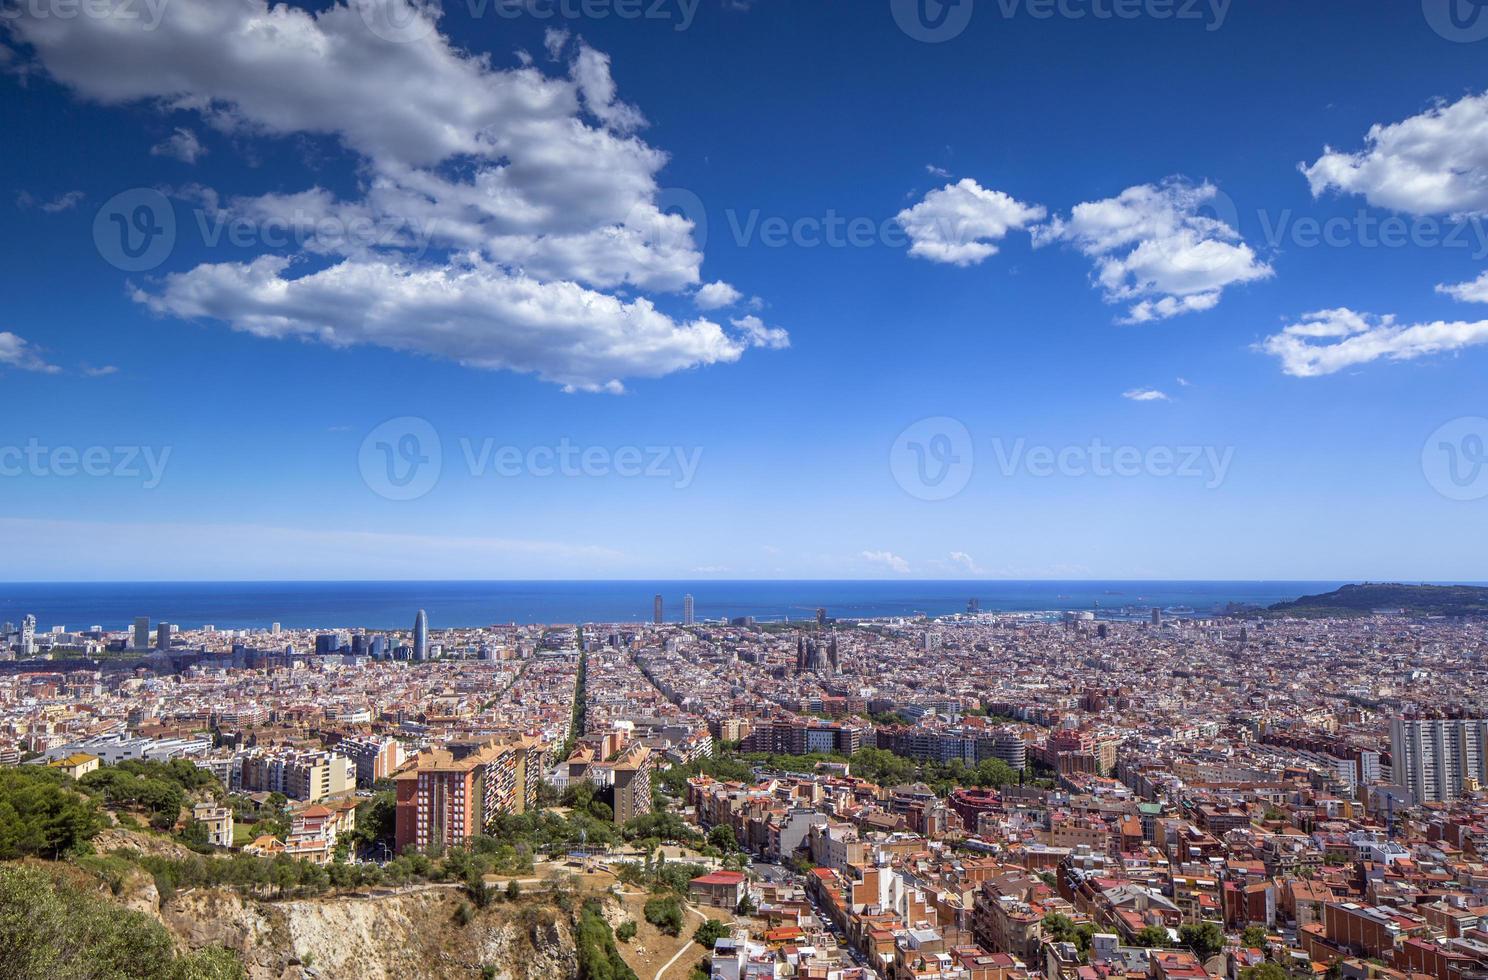 barcelona stad horisont foto